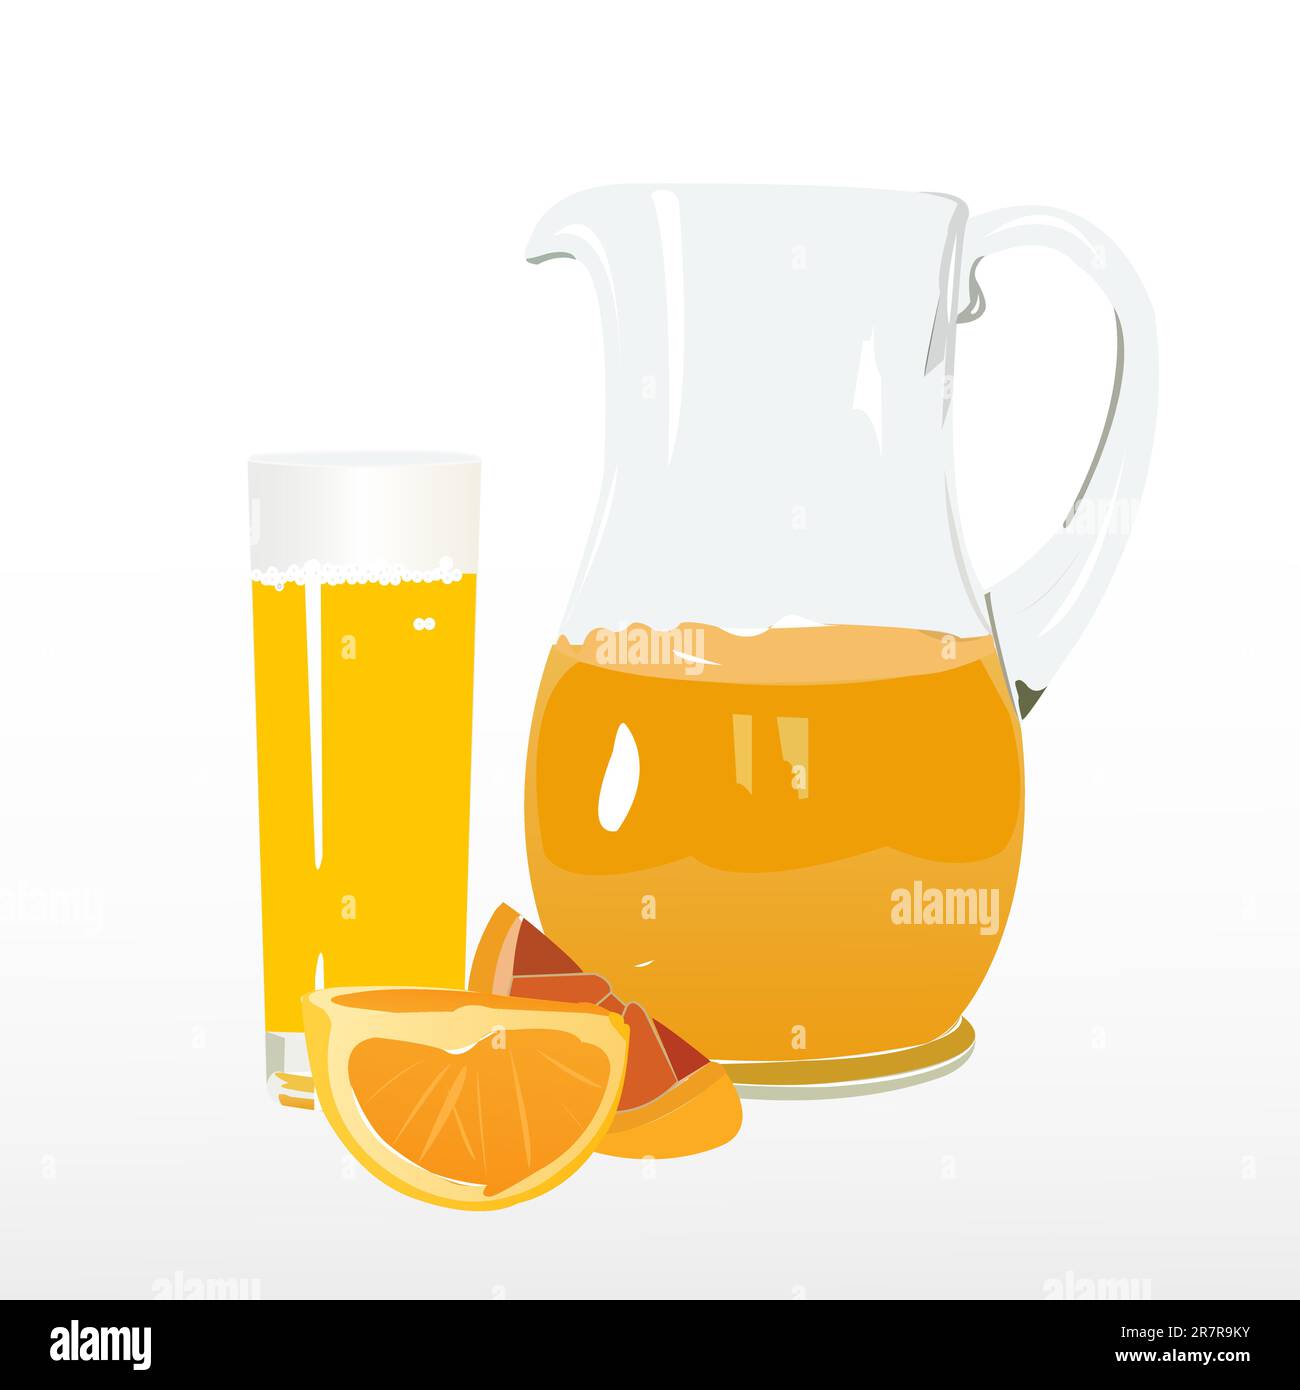 Sticker pitcher orange juice on white Royalty Free Vector